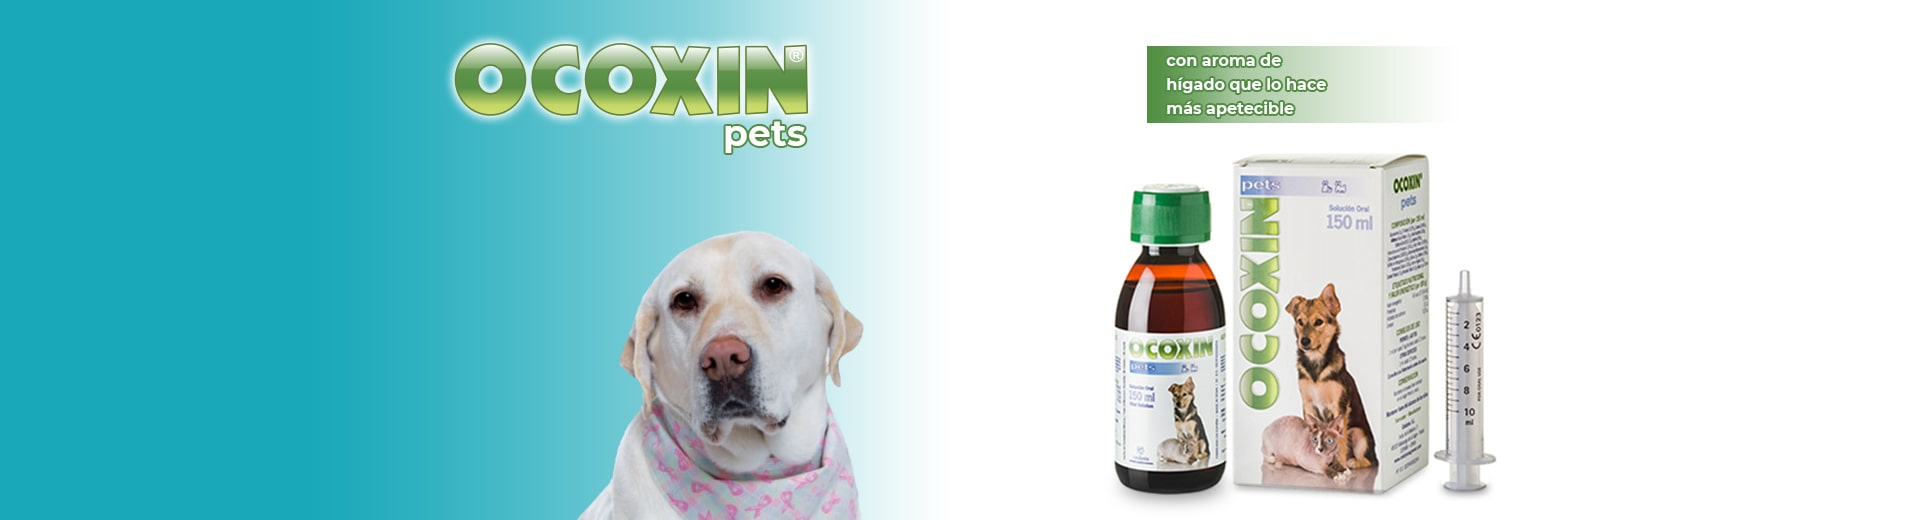 Ocoxin Pets | Dermaceutical México